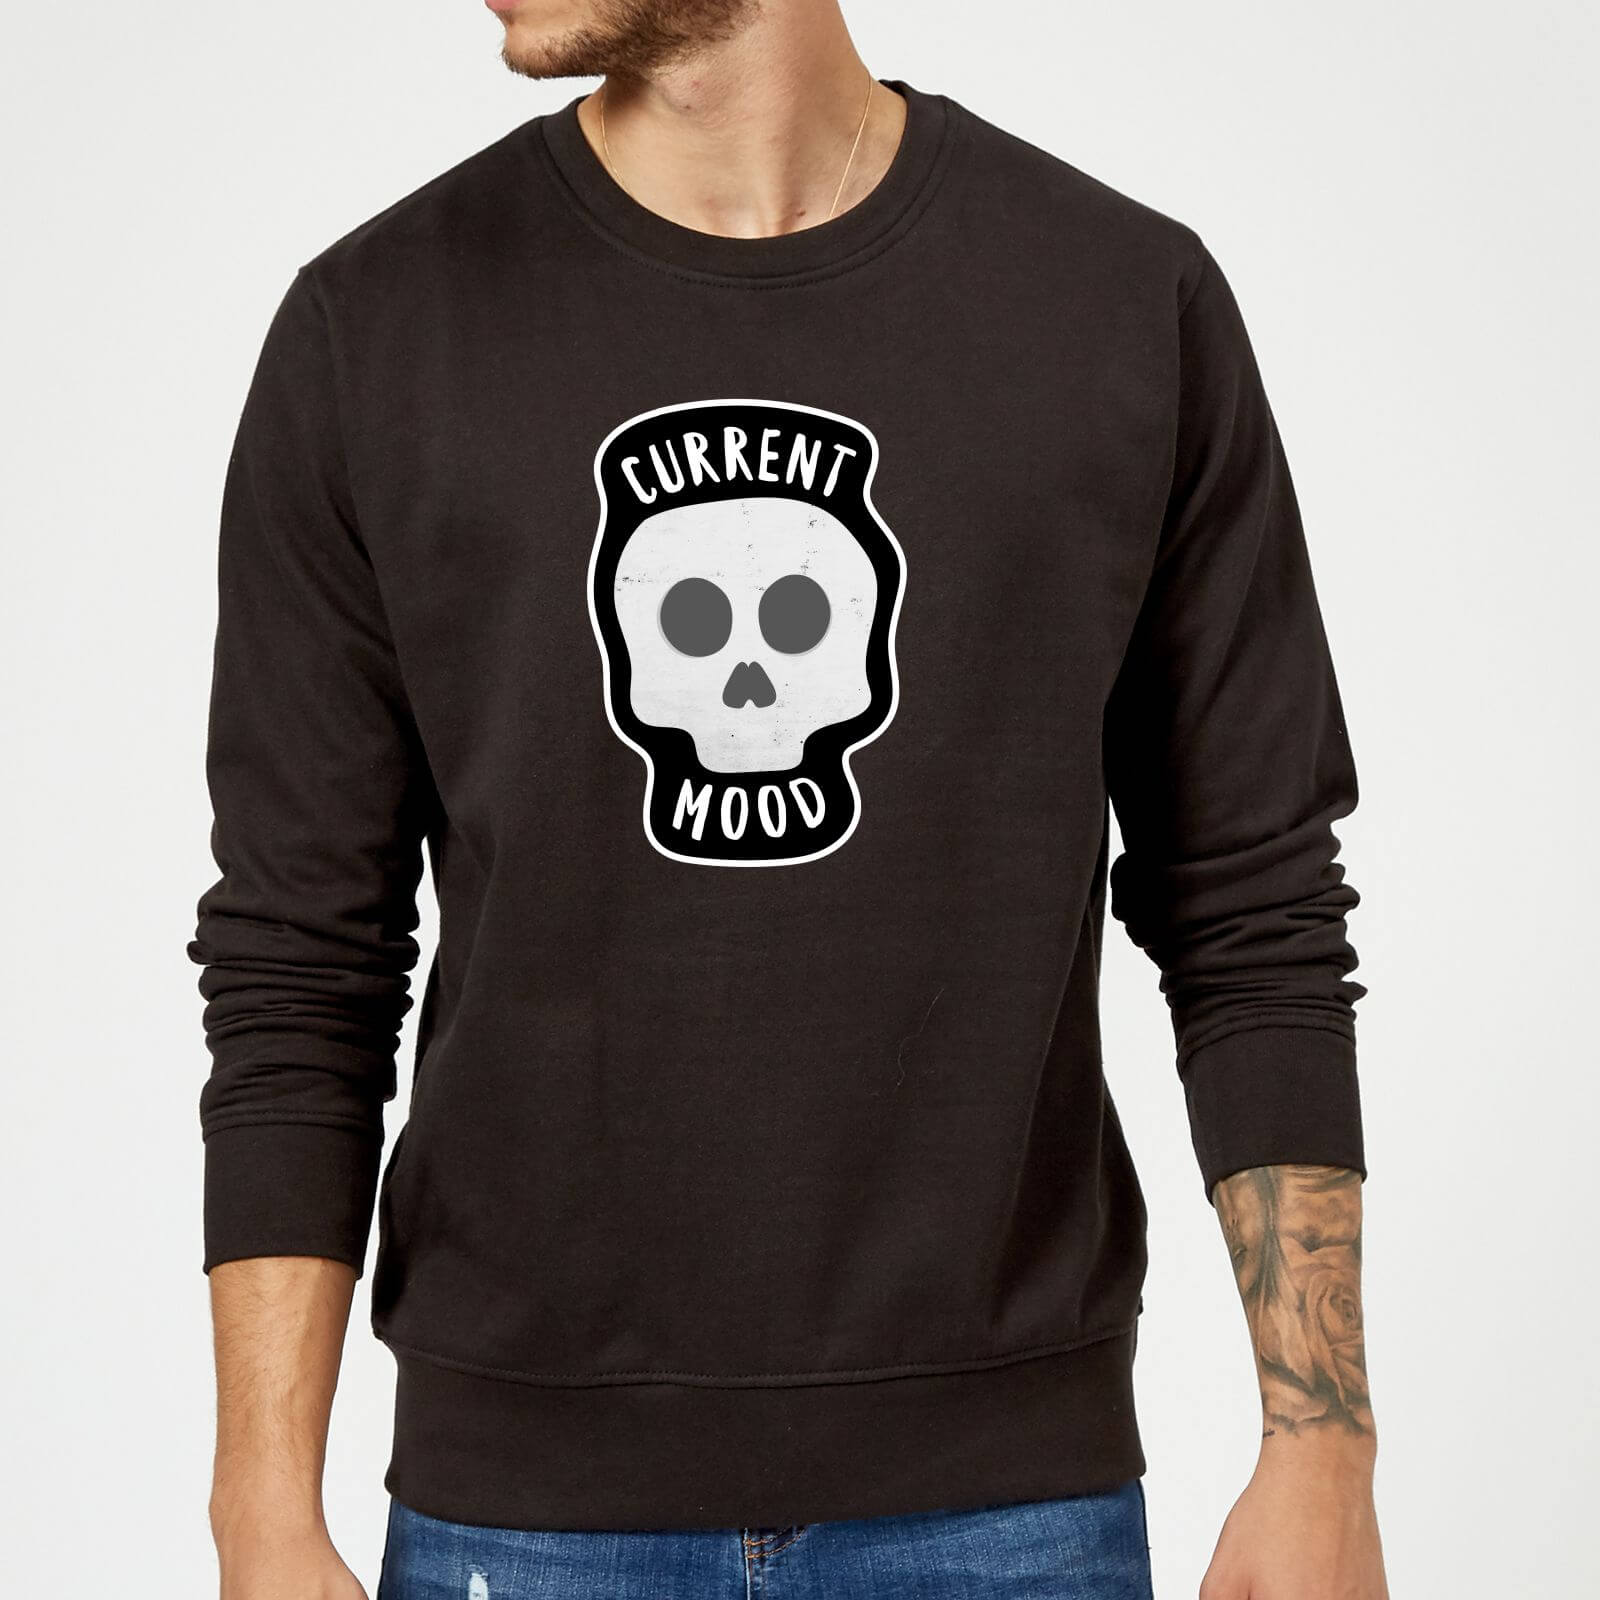 Current Mood Sweatshirt - Black - M